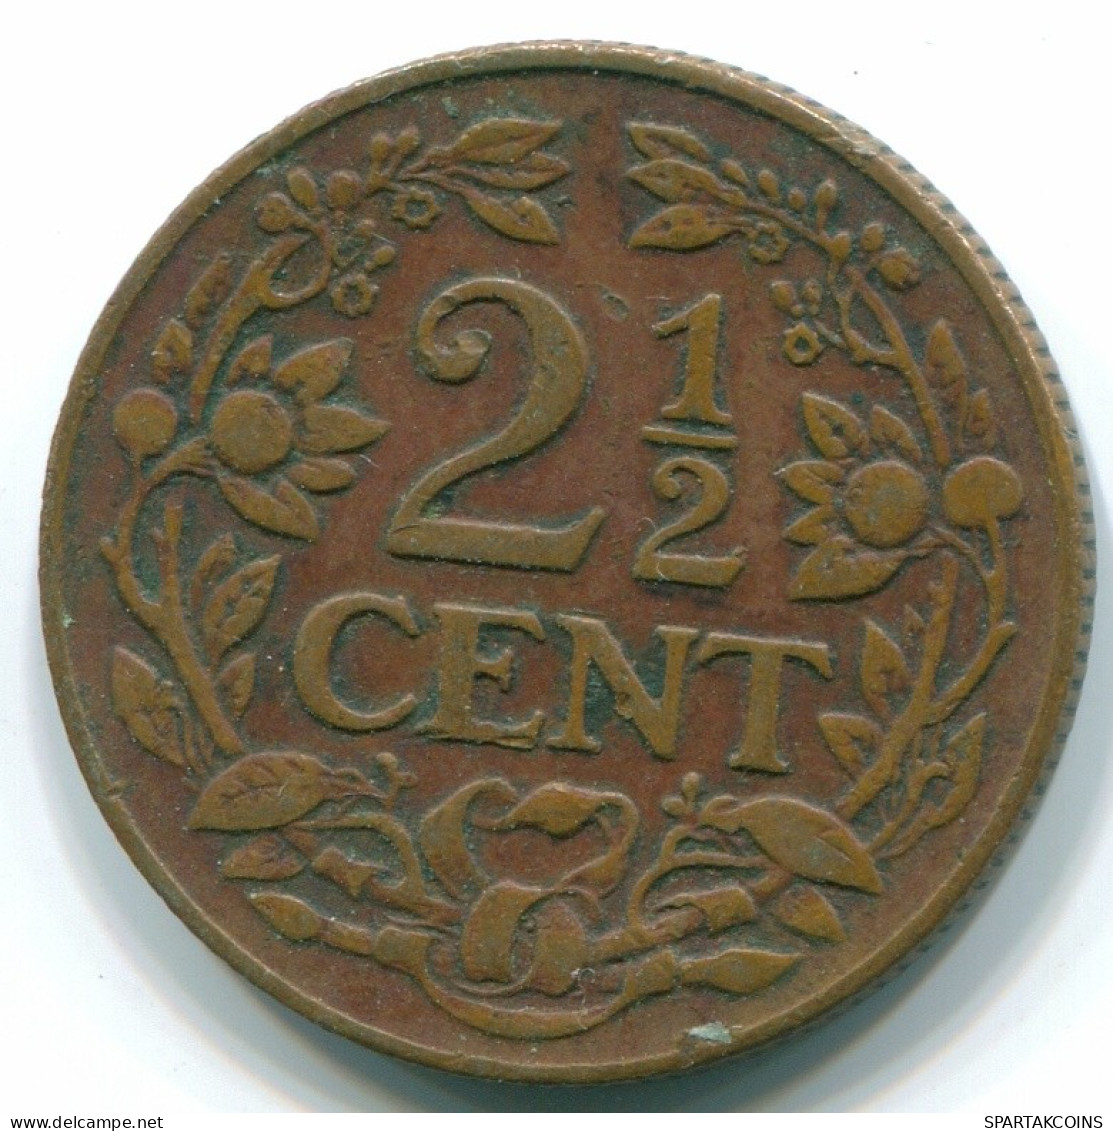 2 1/2 CENT 1944 CURACAO NÉERLANDAIS NETHERLANDS Bronze Colonial Pièce #S10144.F.A - Curacao